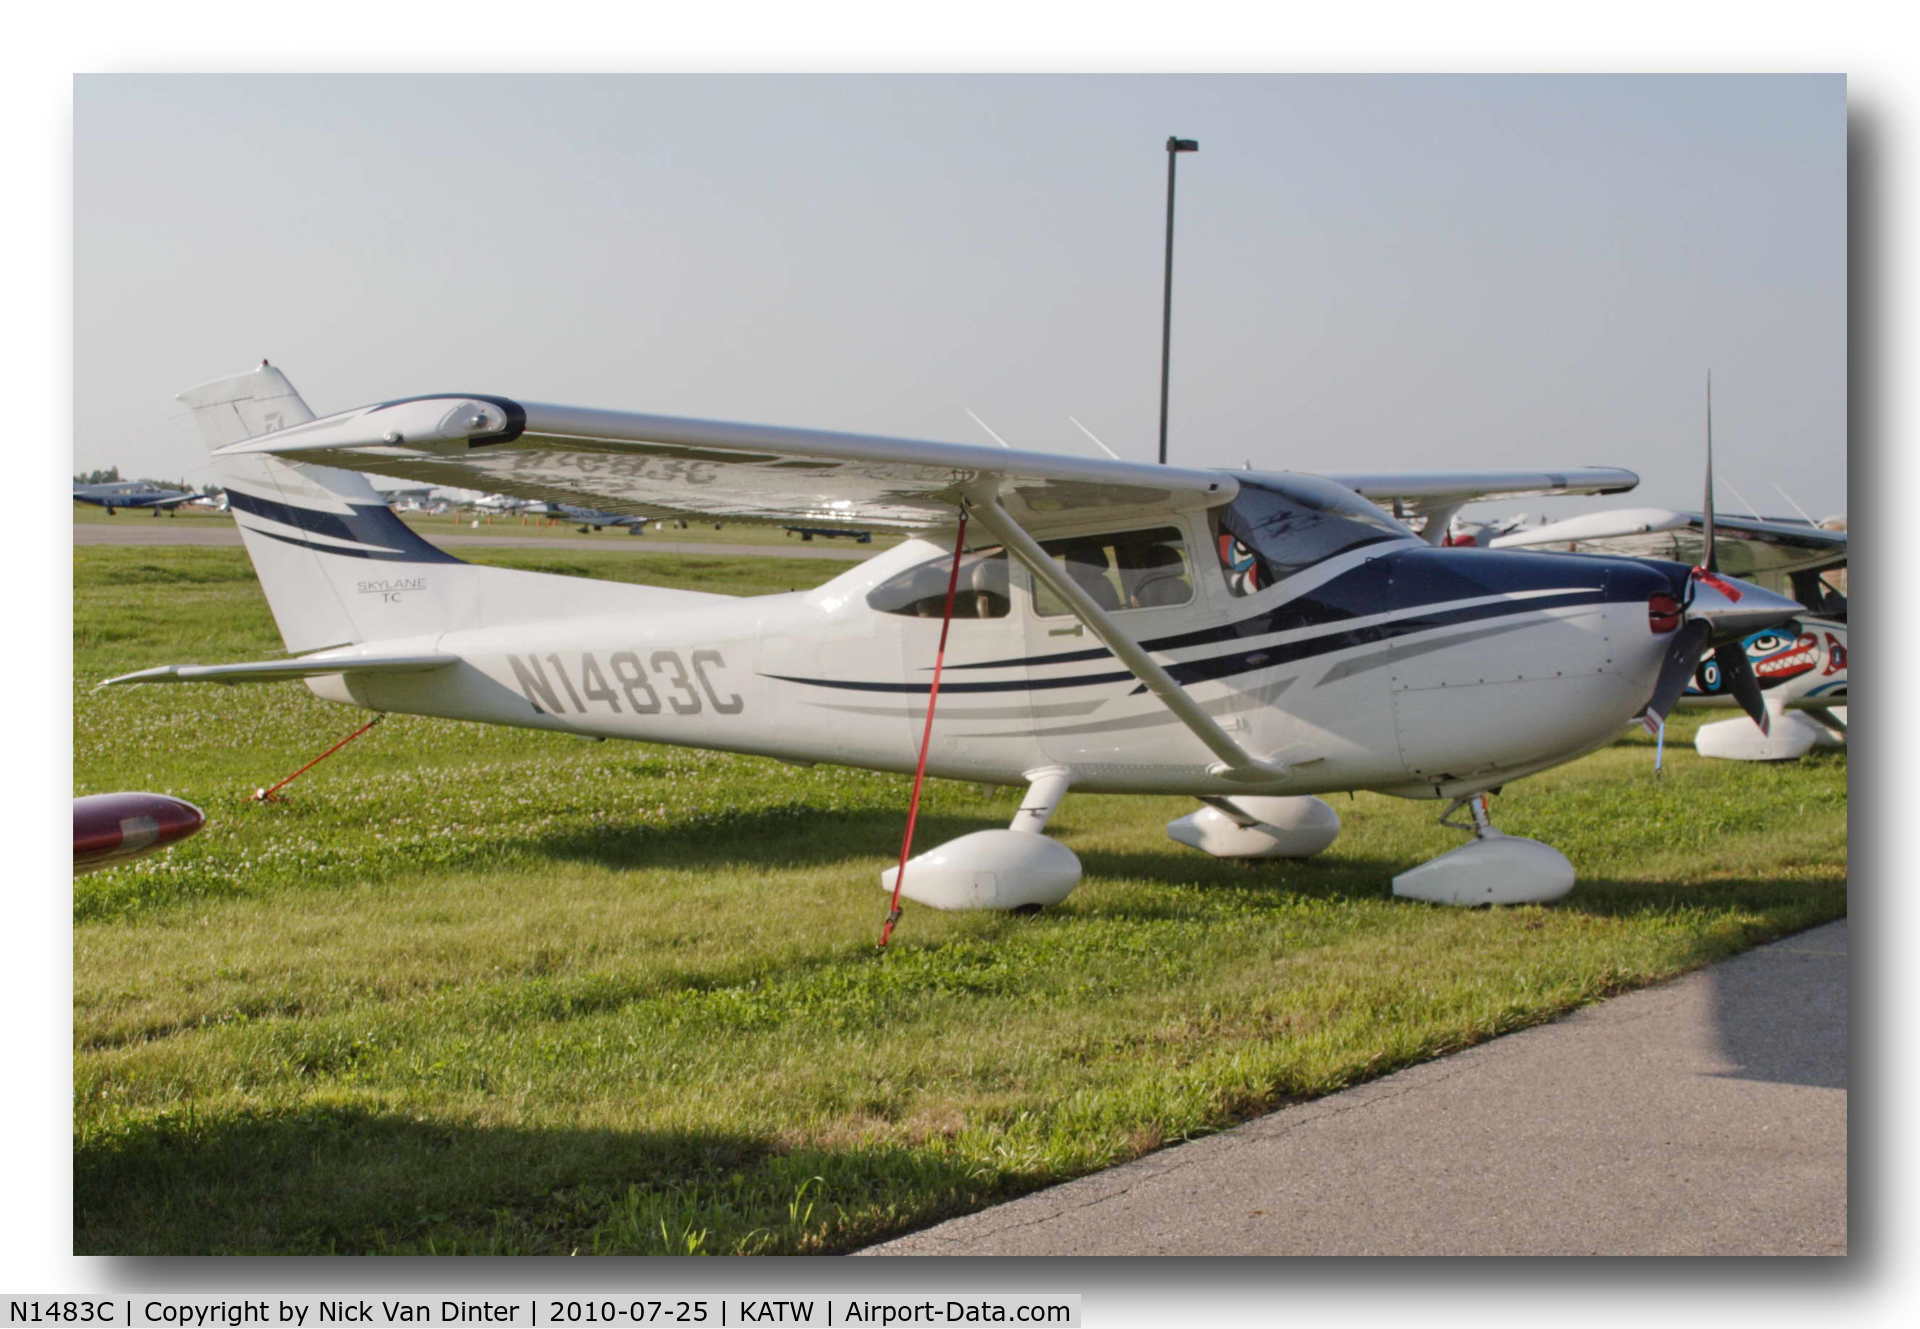 N1483C, 2005 Cessna T182T Turbo Skylane C/N T18208419, Sure KATW is nice ... I still want to go to Oshkosh!